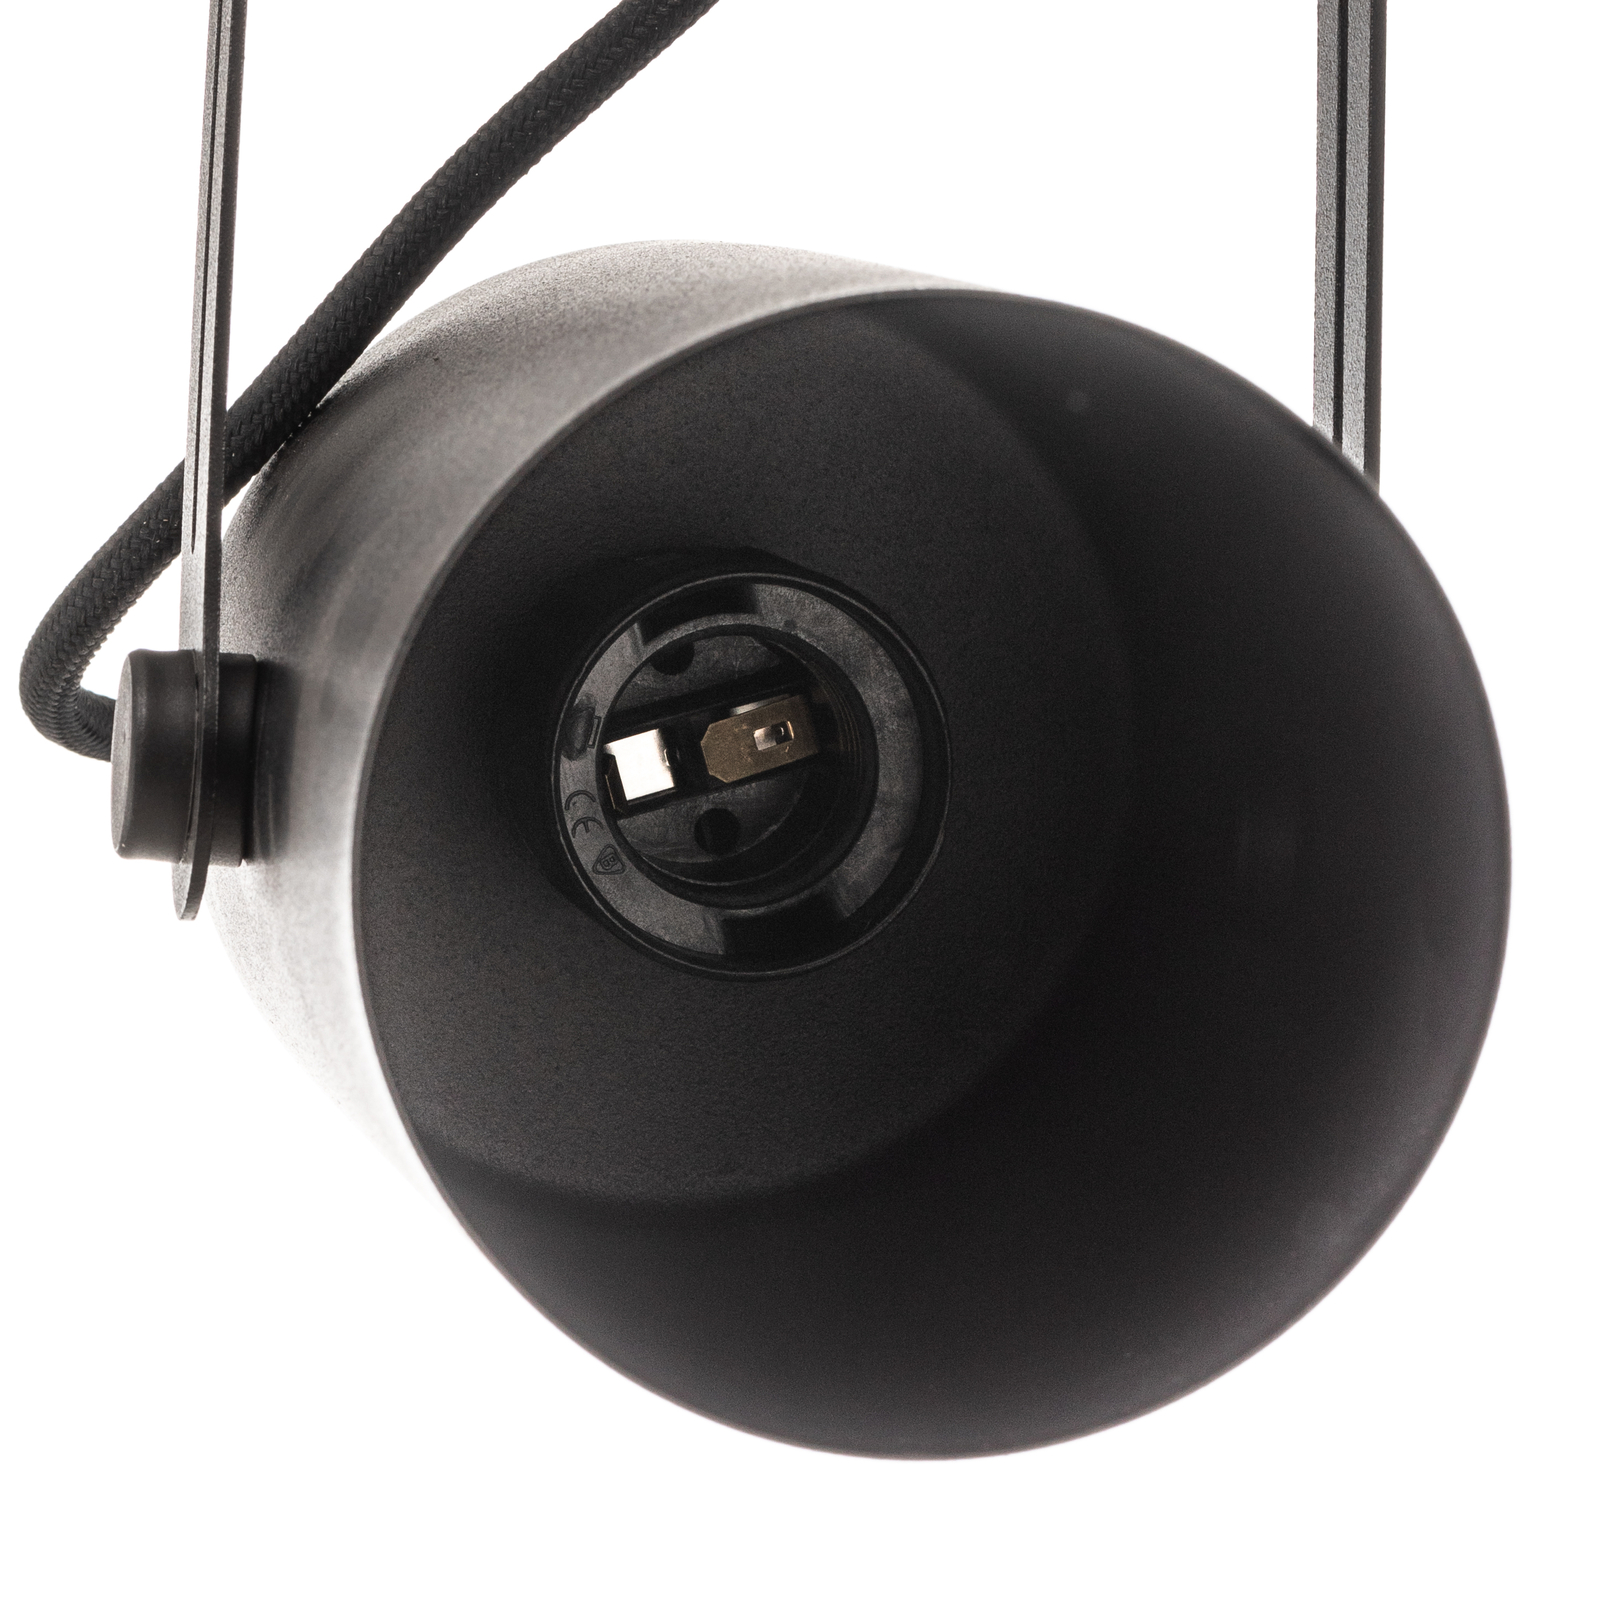 Reflector ceiling spotlight, black, three-bulb